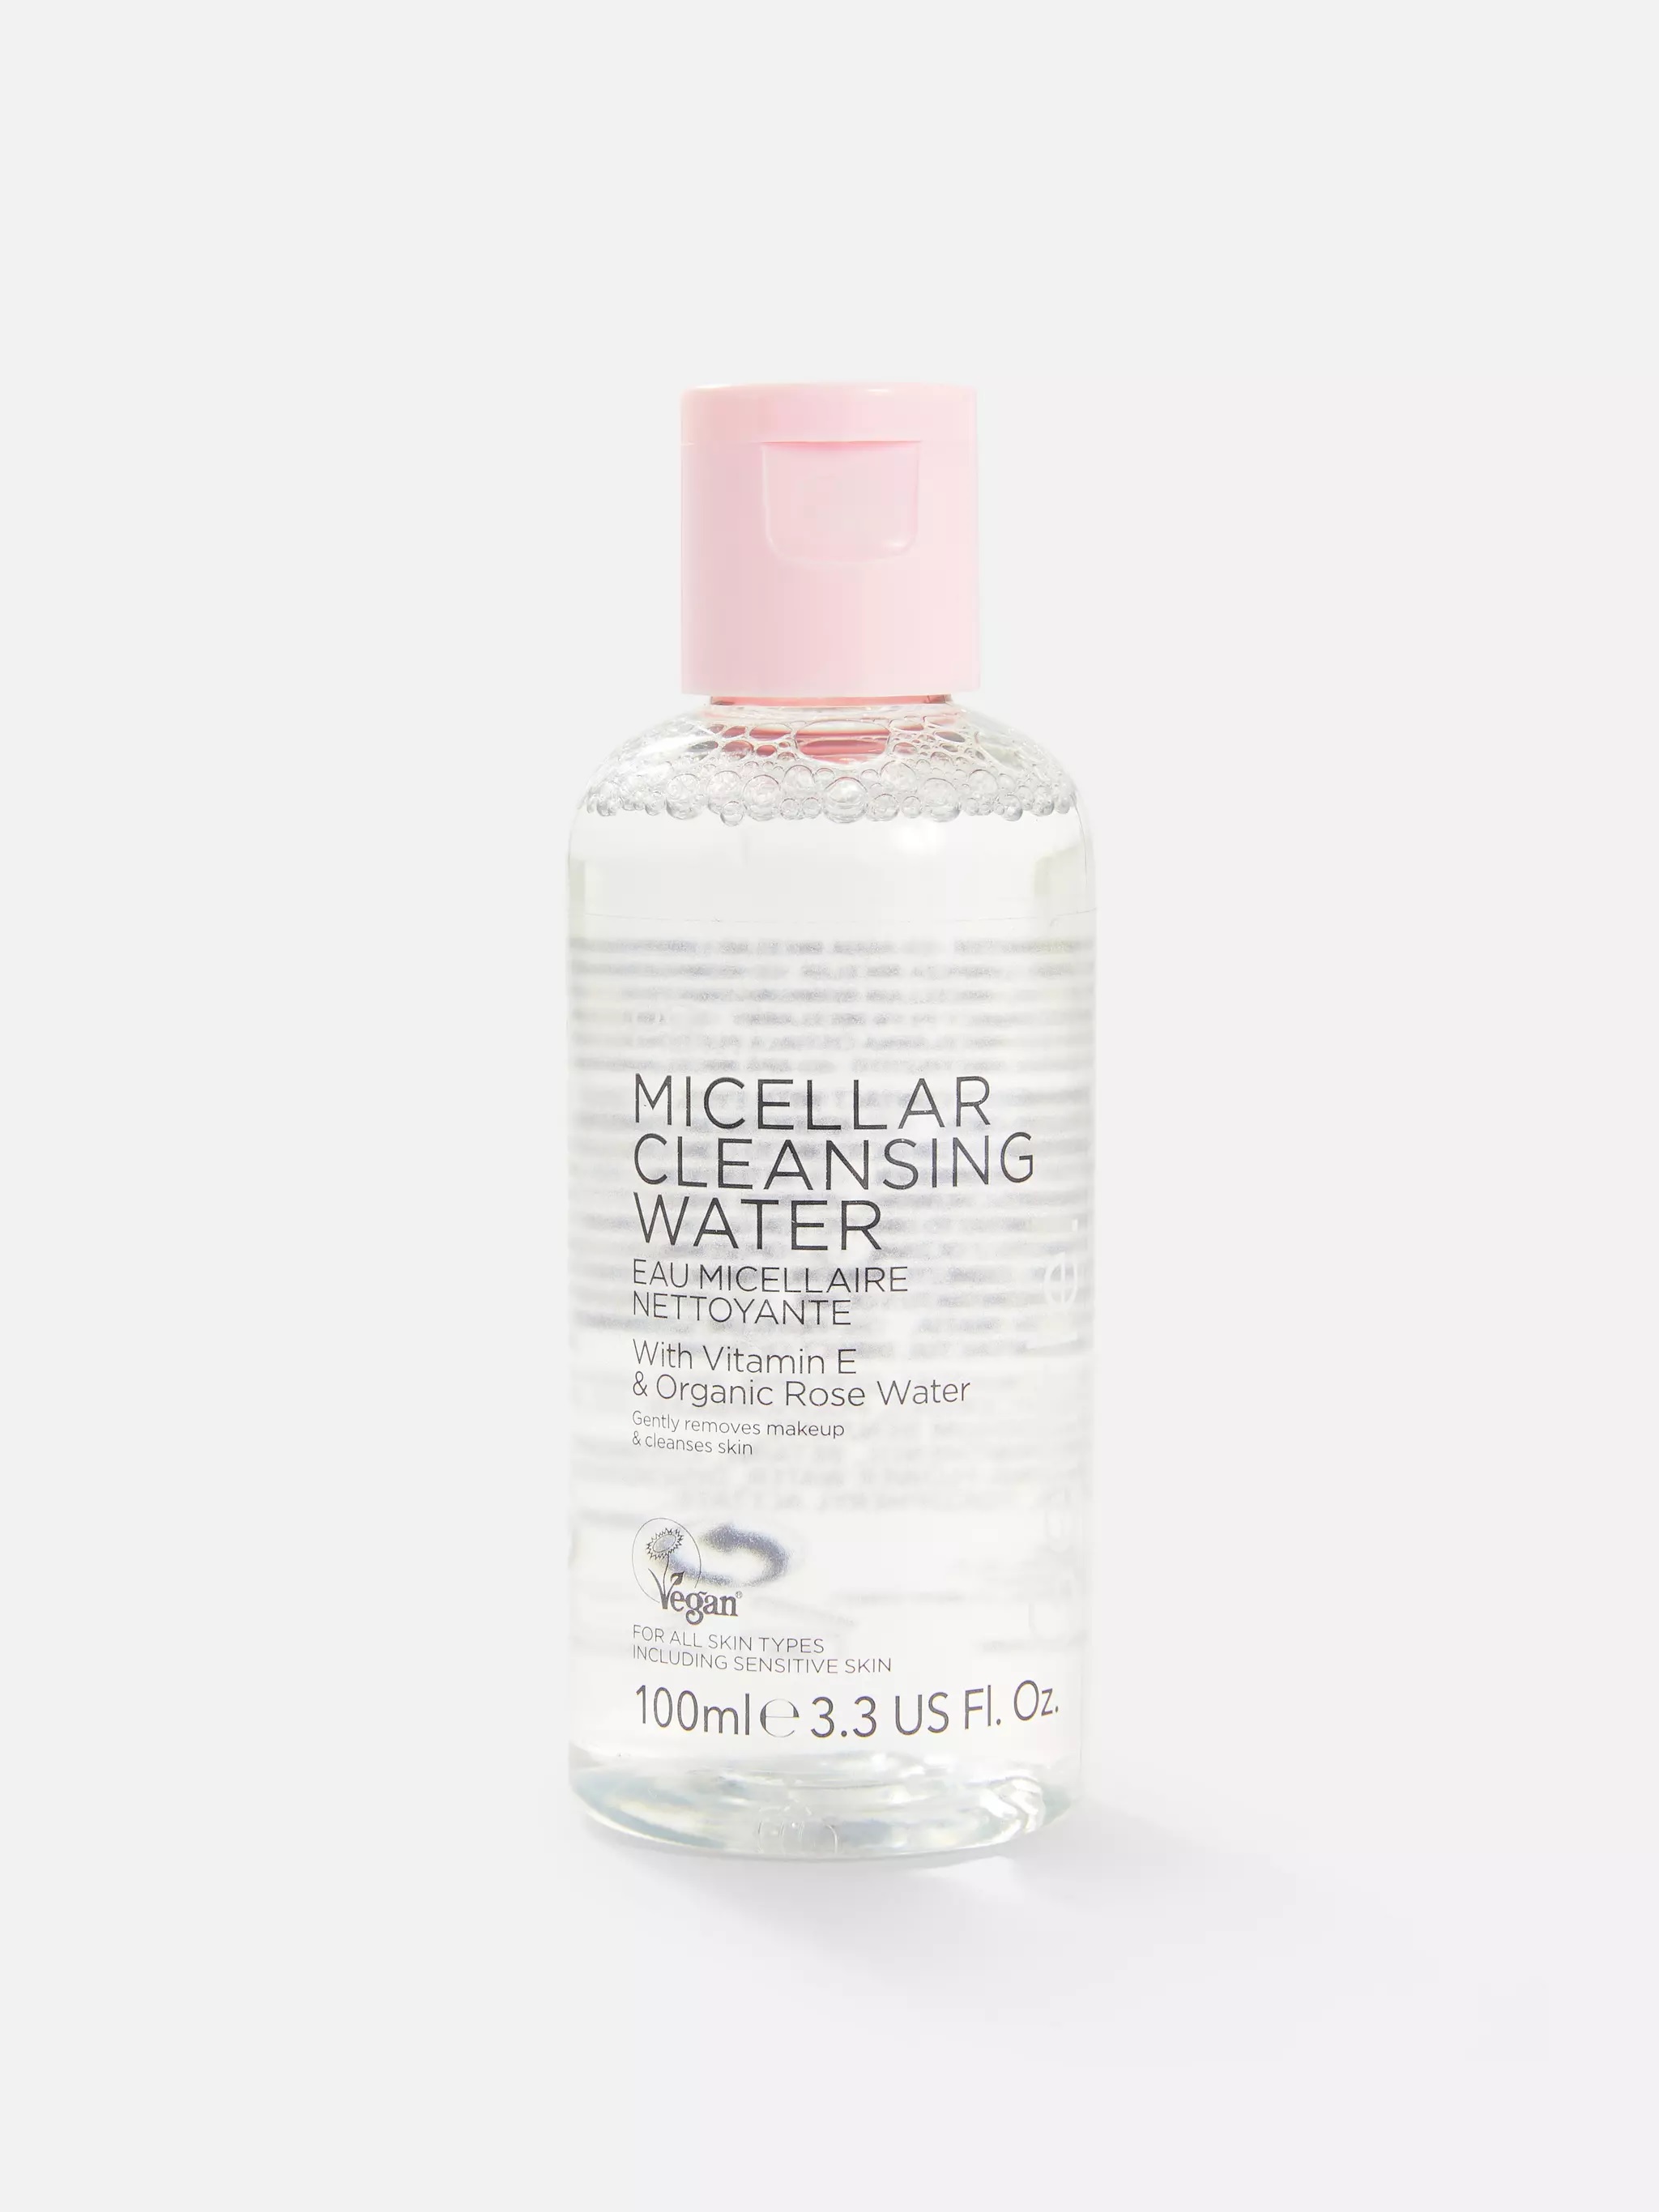 Primark’s PS micellar cleansing water, £1